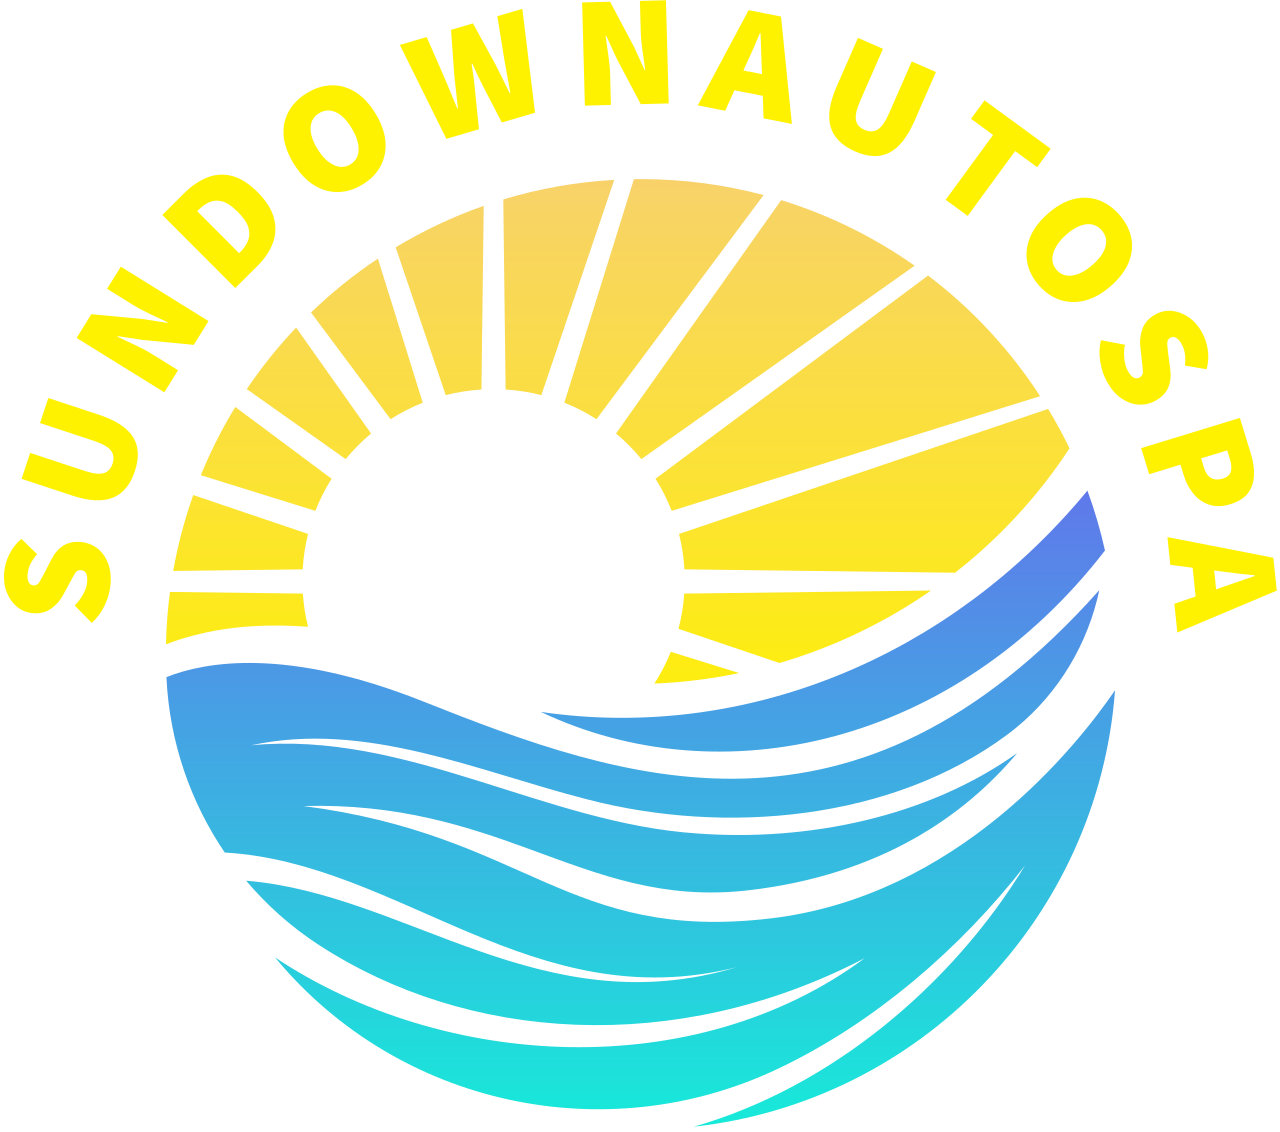 sundownautospa's logo